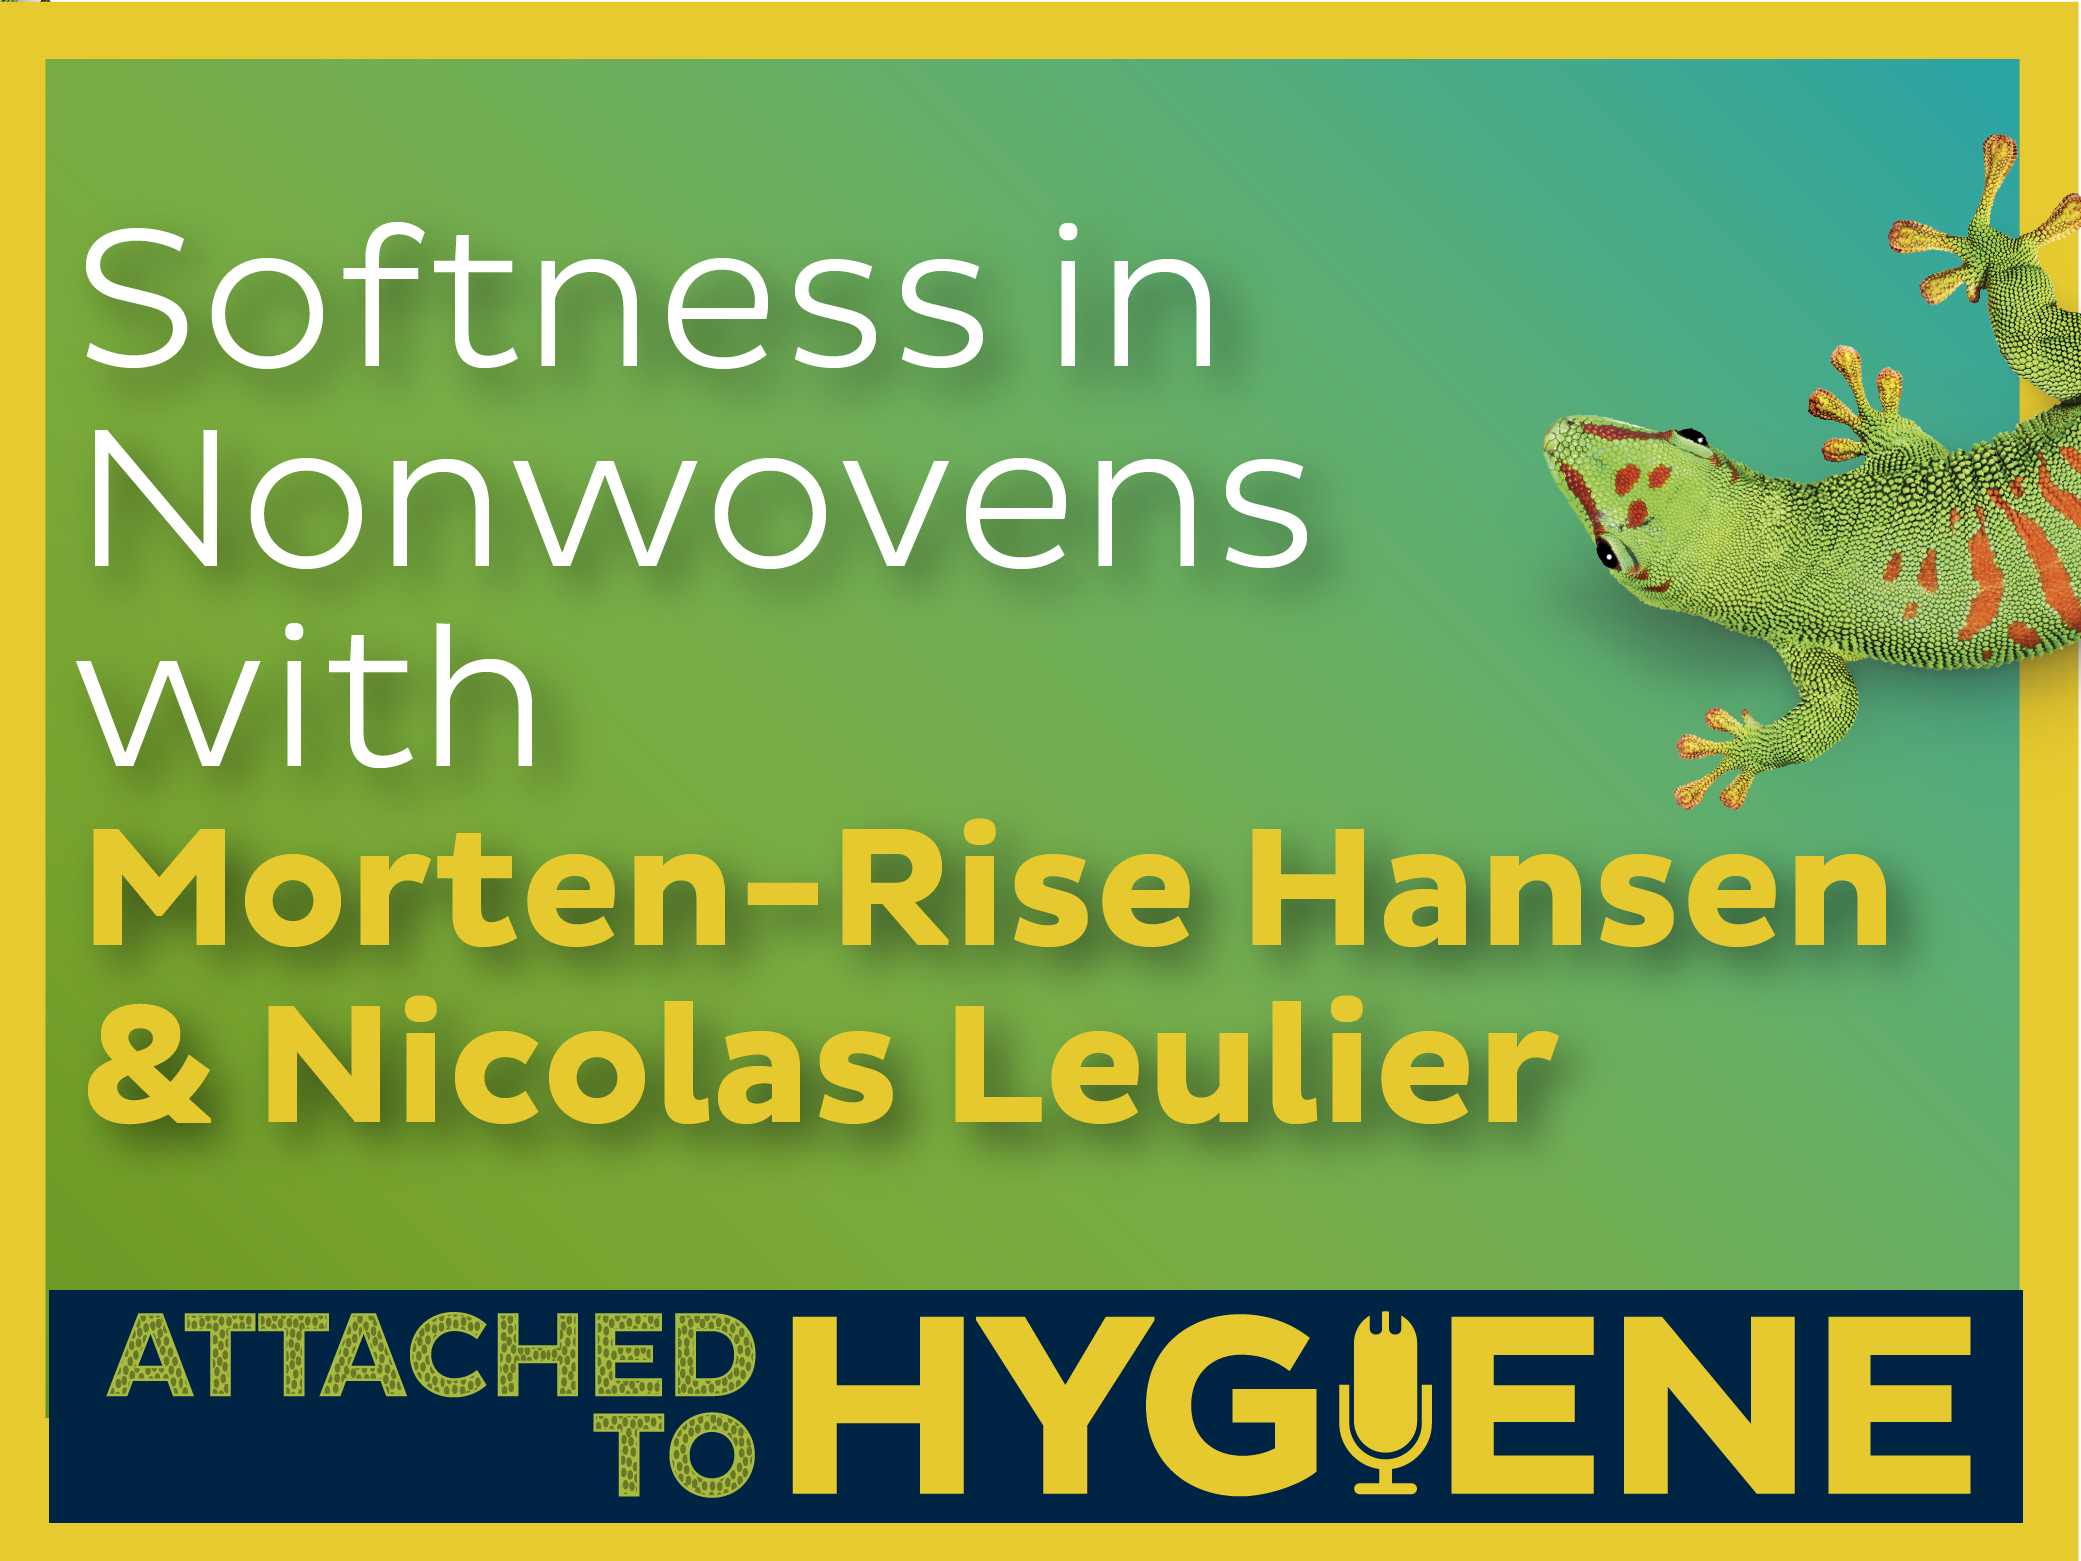 Softness-in-Nonwovens-with-Morten-Rise-Hansen-and-Nicolas-Leulier